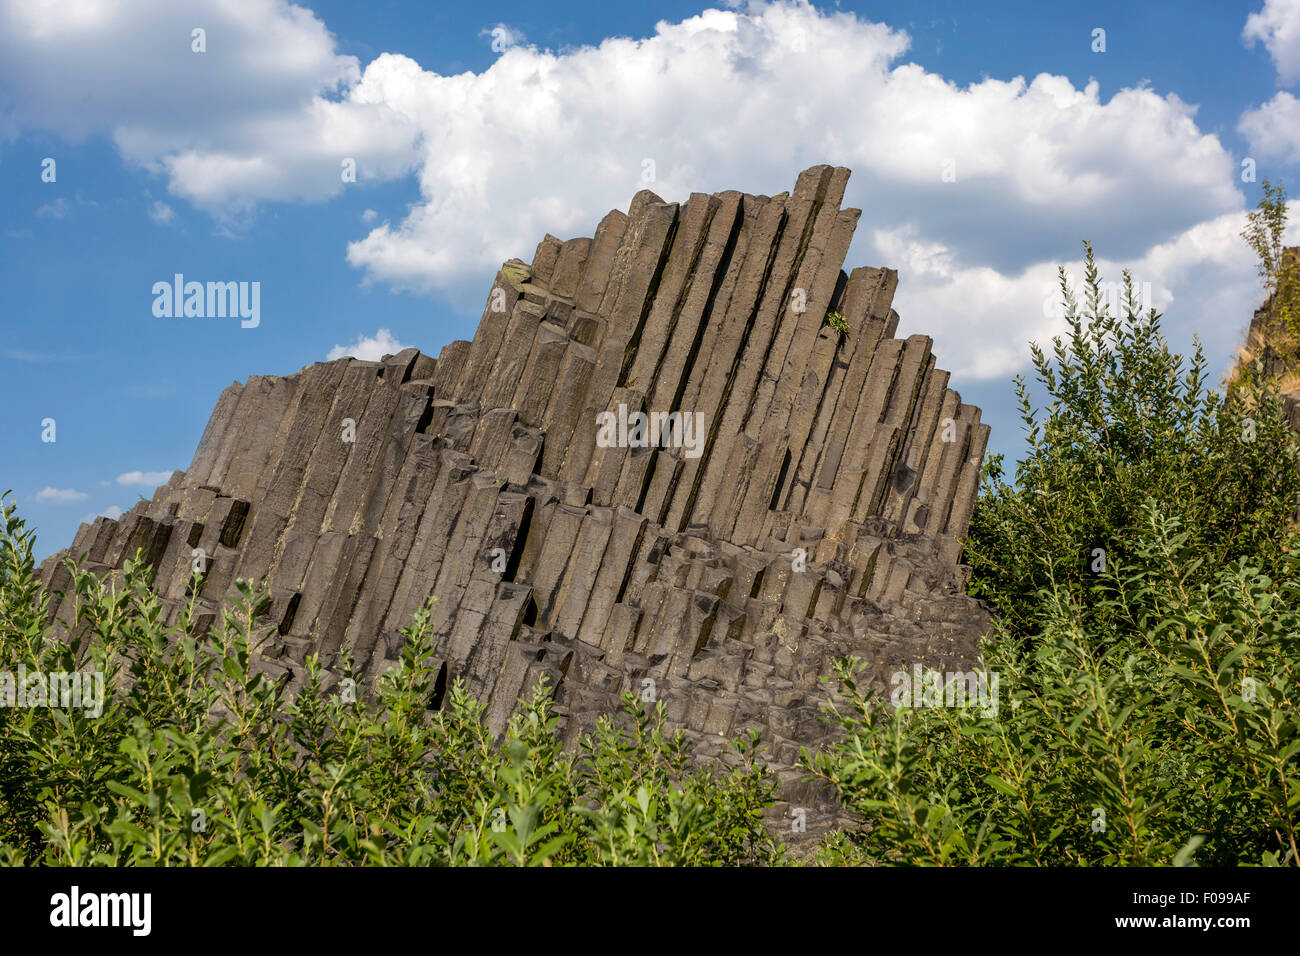 Panska Skala, geologische Formation, Stein-Orgel, Kamenicky Senov, Tschechische Republik Stockfoto